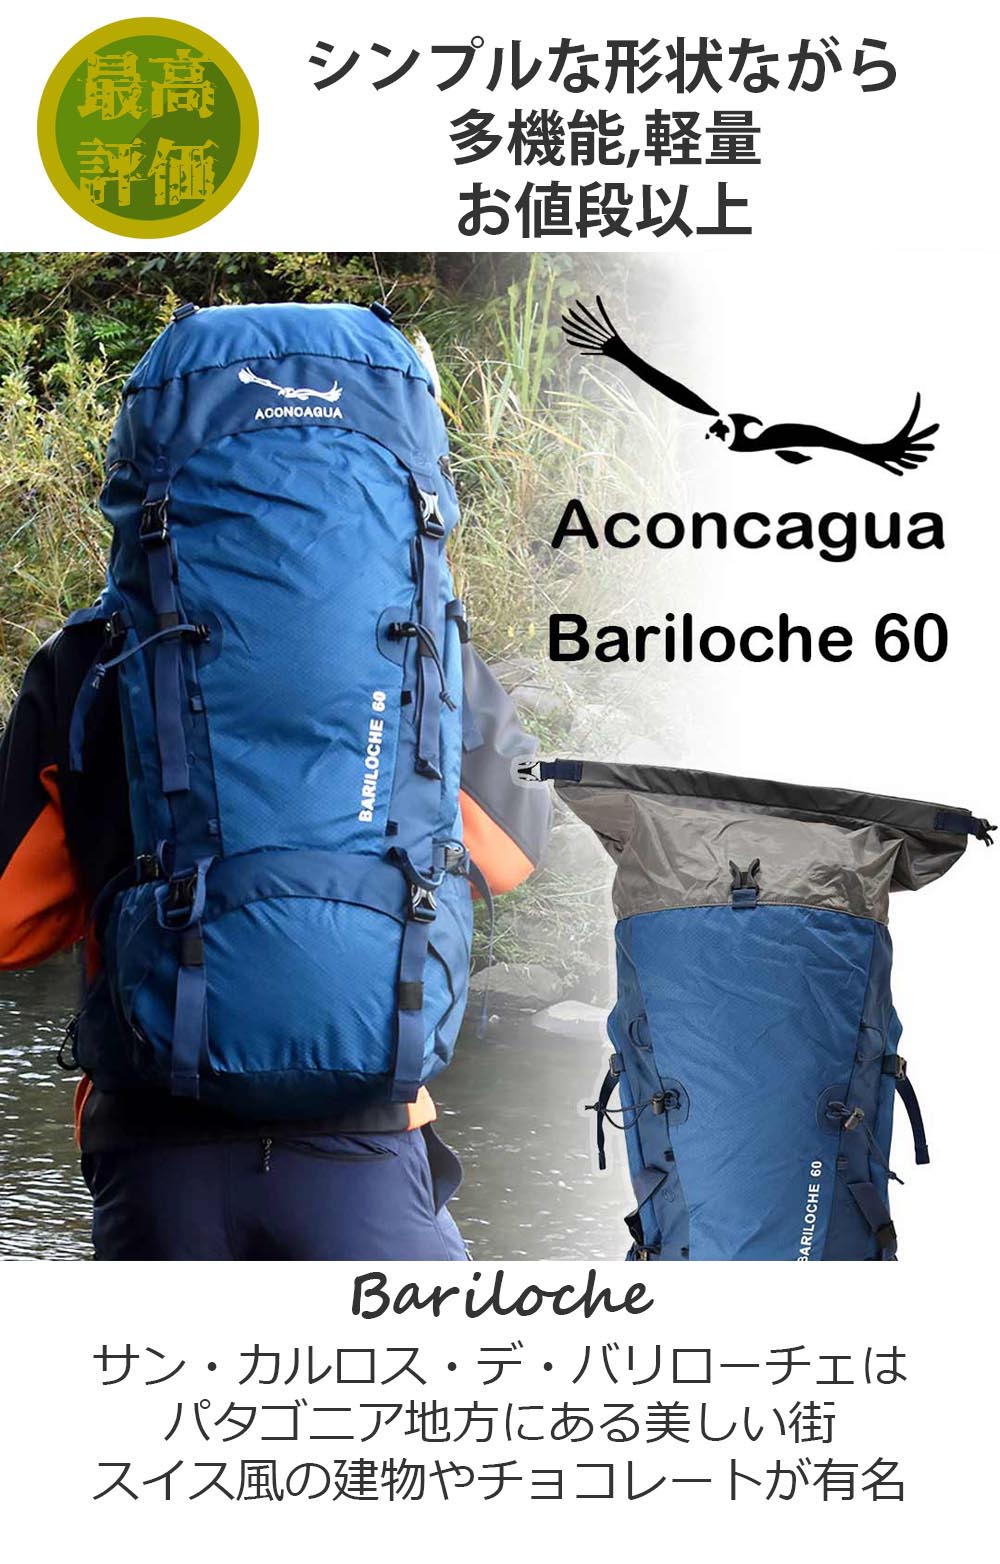 Aconcagua Bariloche バリローチェ 60  60L バックパック 登山用 旅行用  ボランティア 2WAYS